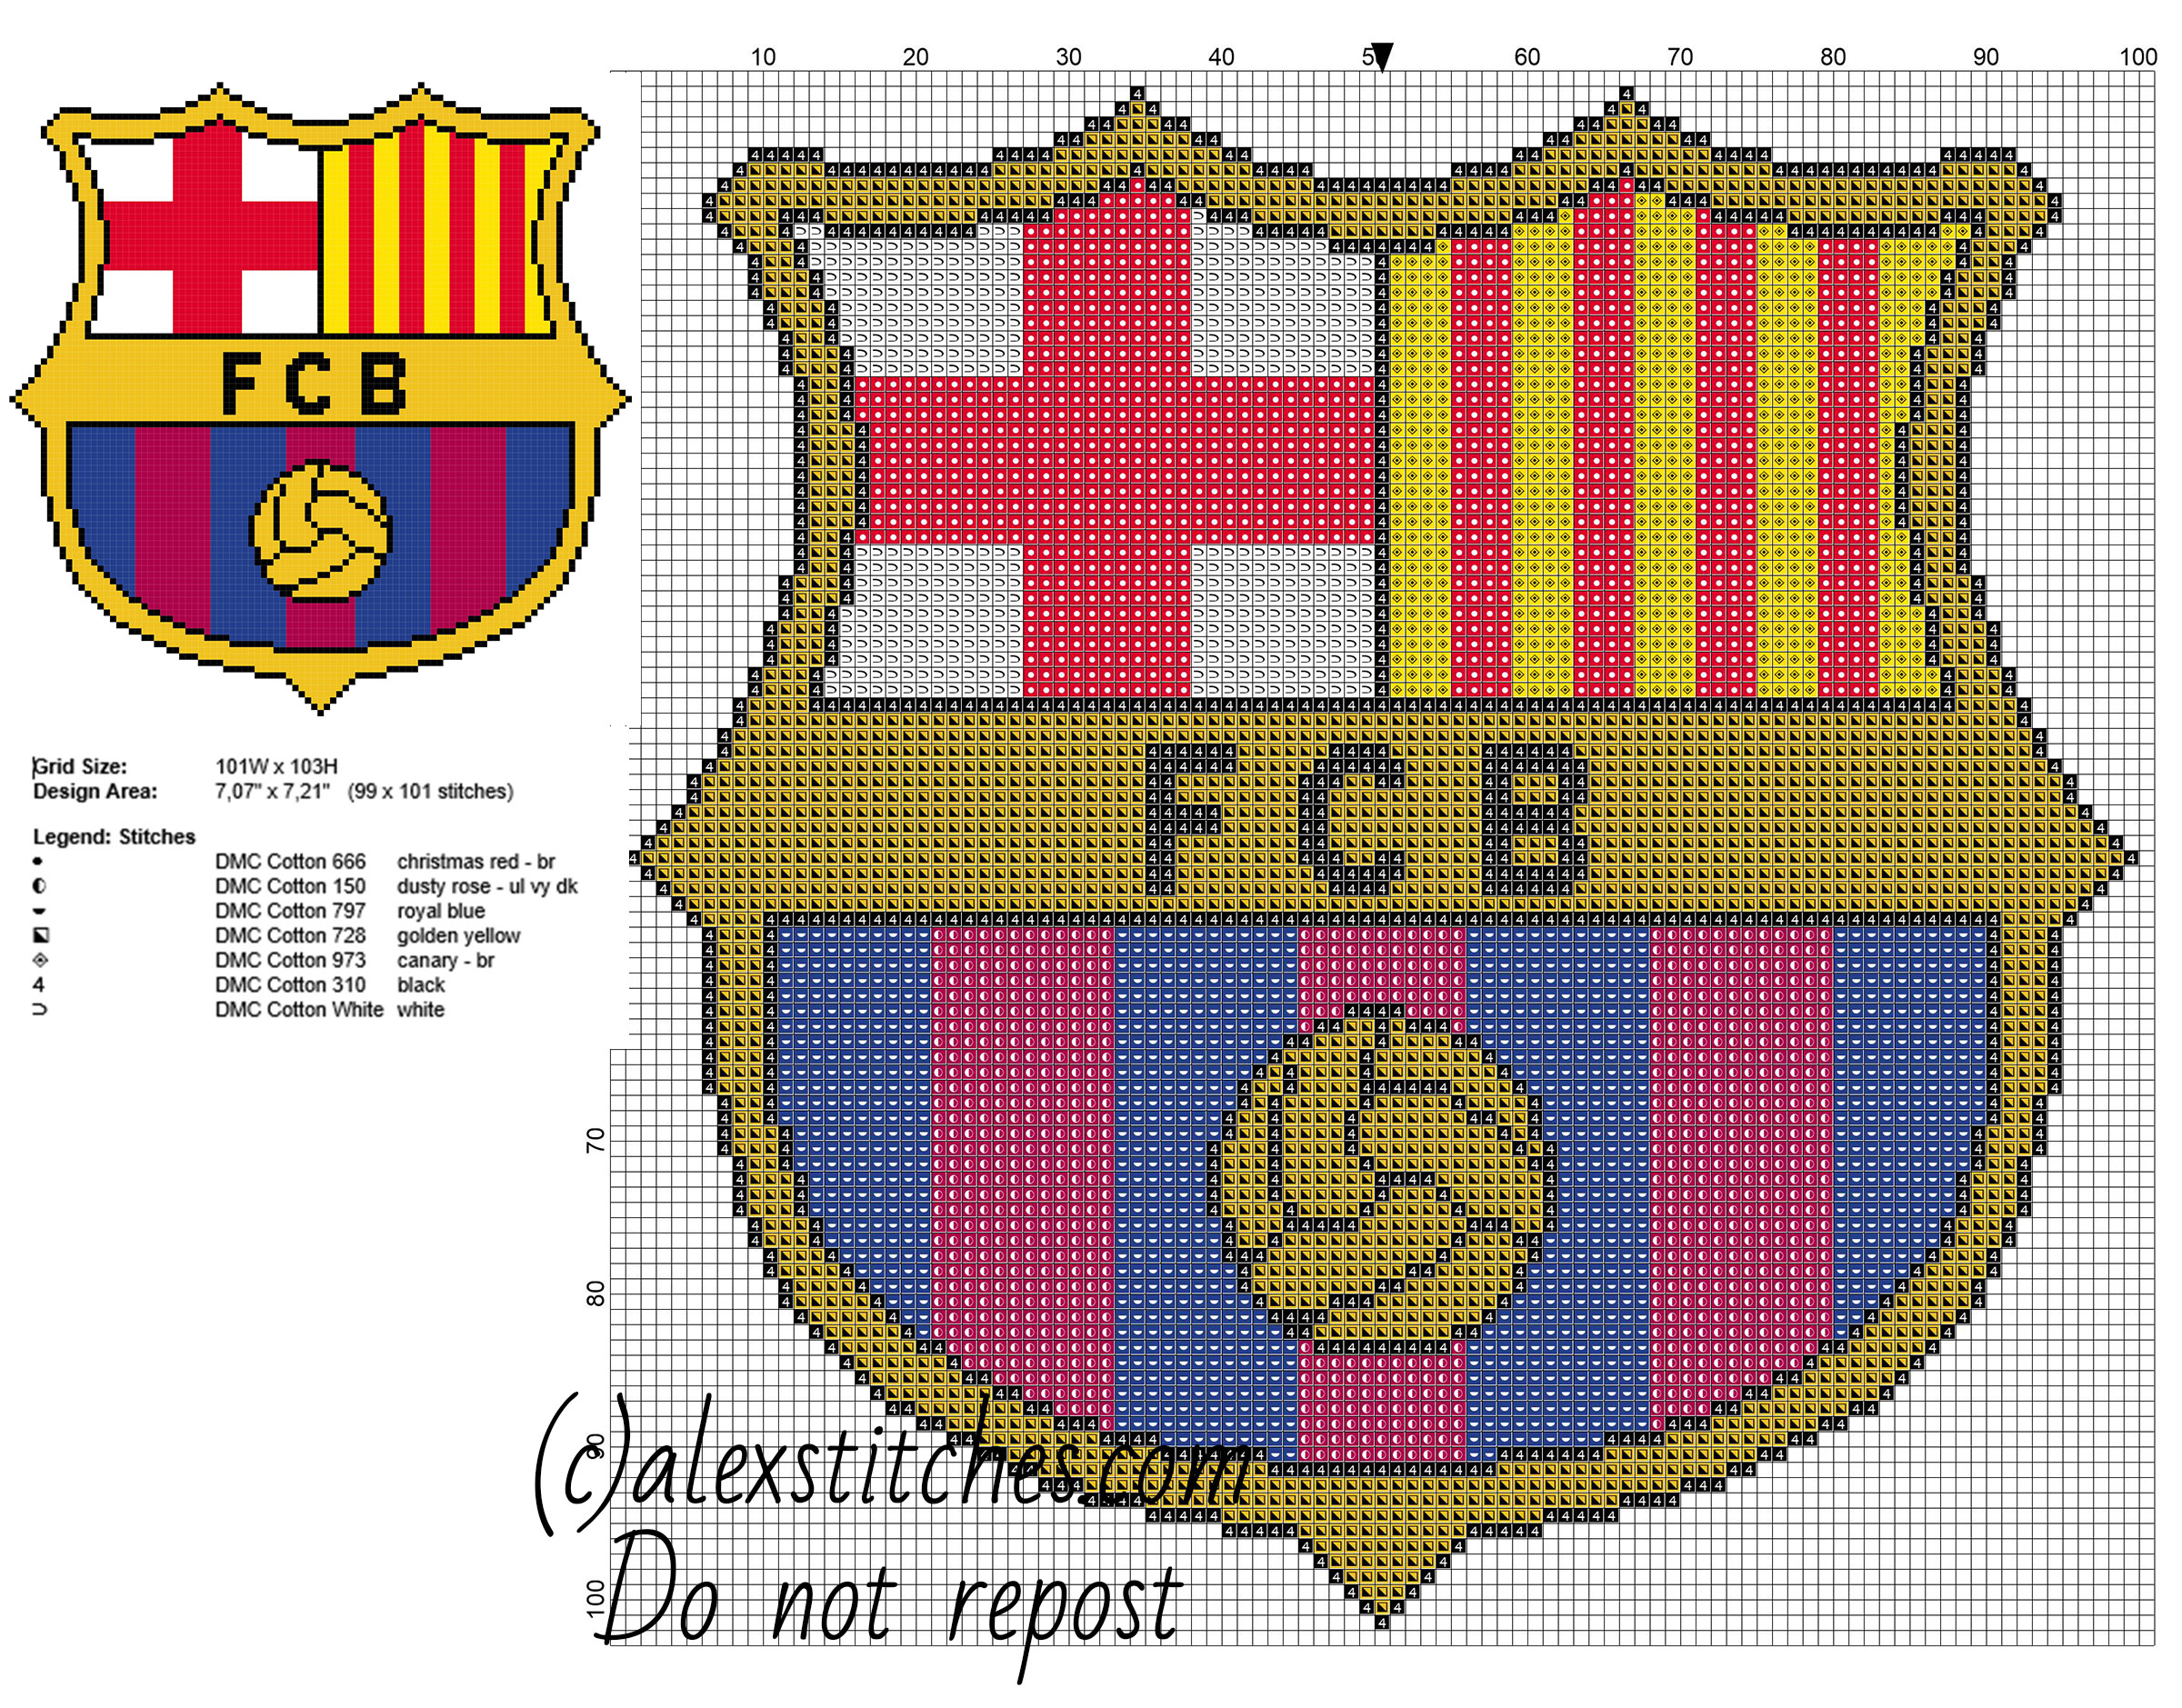 F C Barcelona soccer team badge free cross stitch pattern 99 x 101 stitches 7 DMC threads